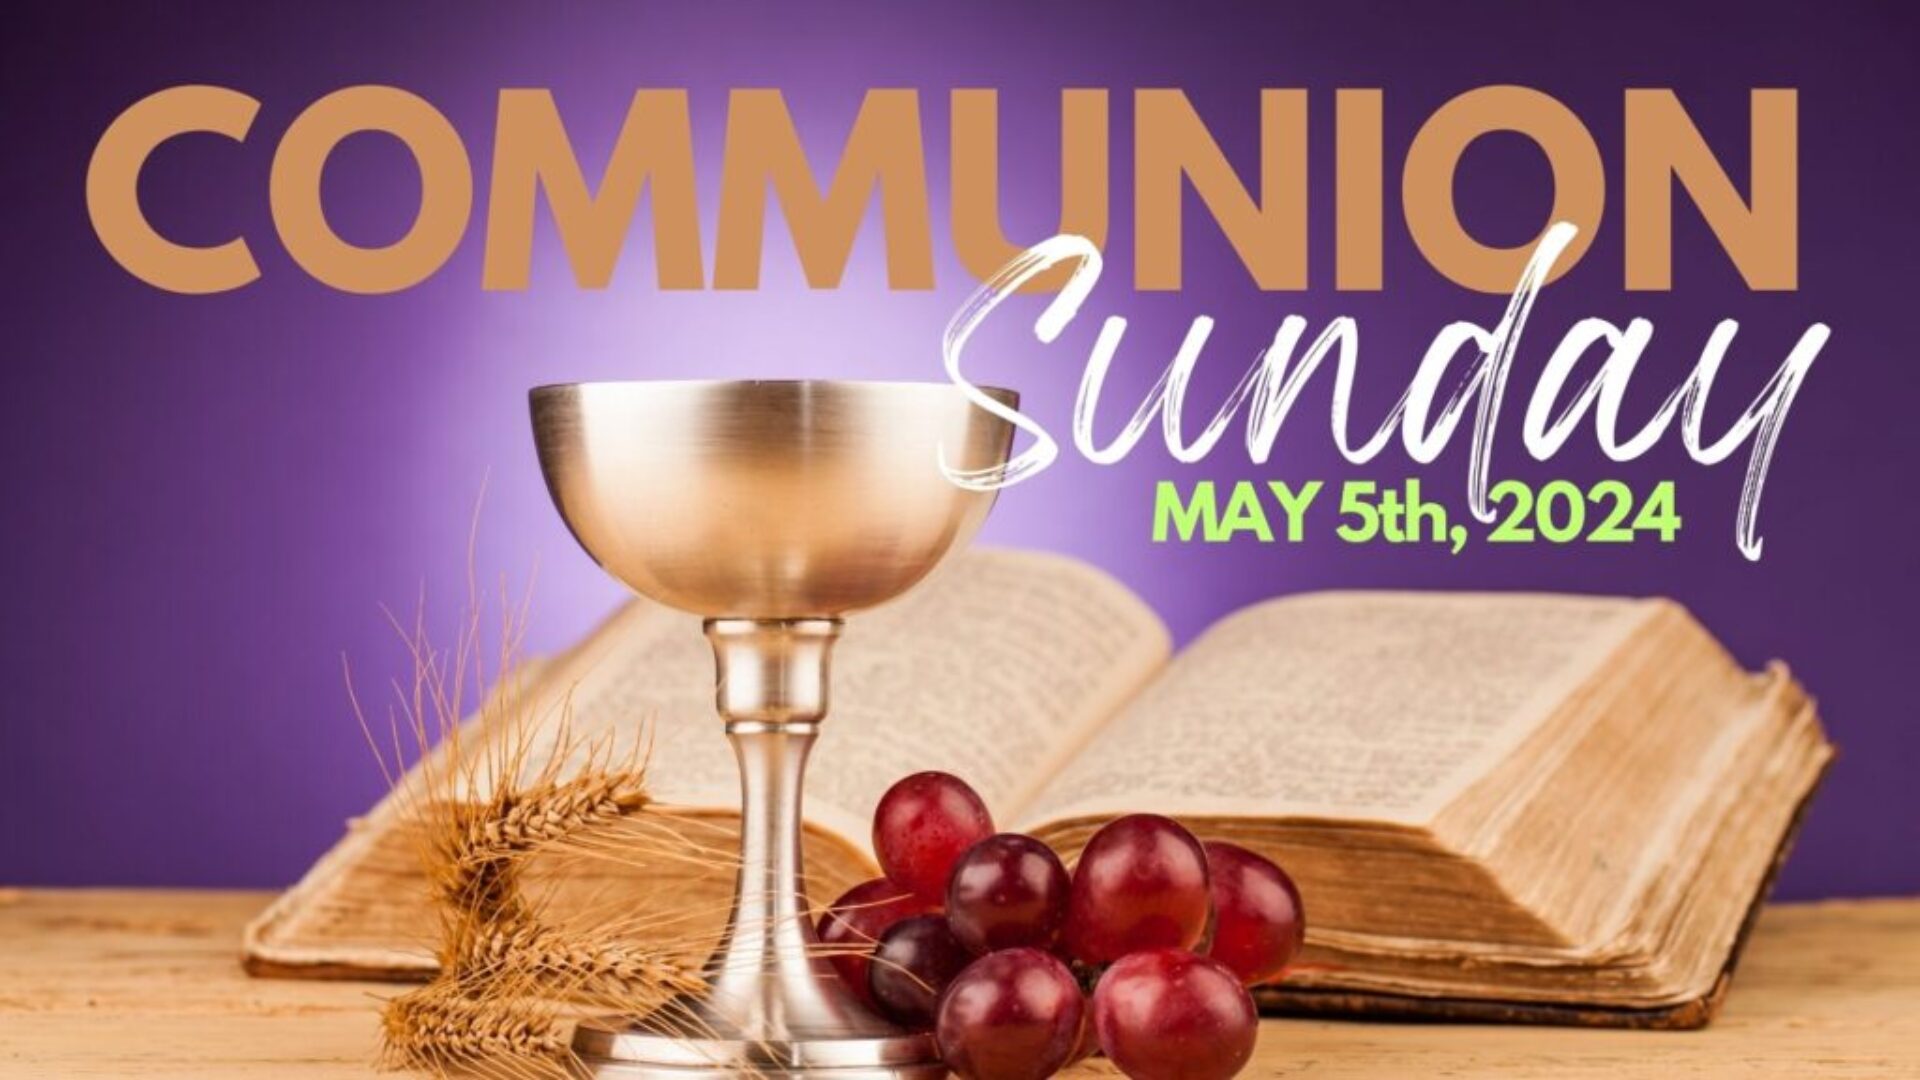 Communion Sunday (1)